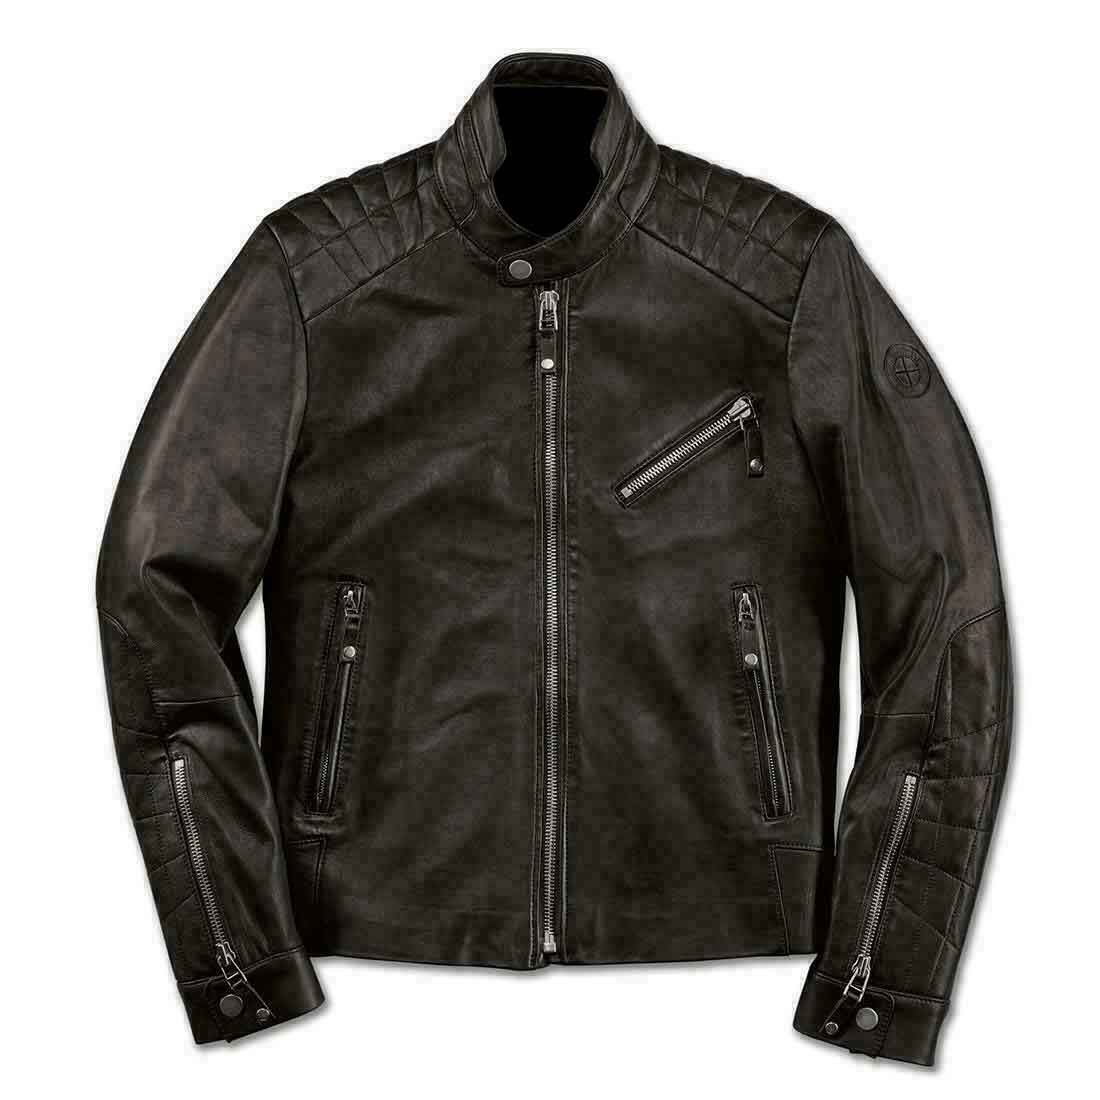 Black BMW Motorcycle Leather Jacket - Maker of Jacket